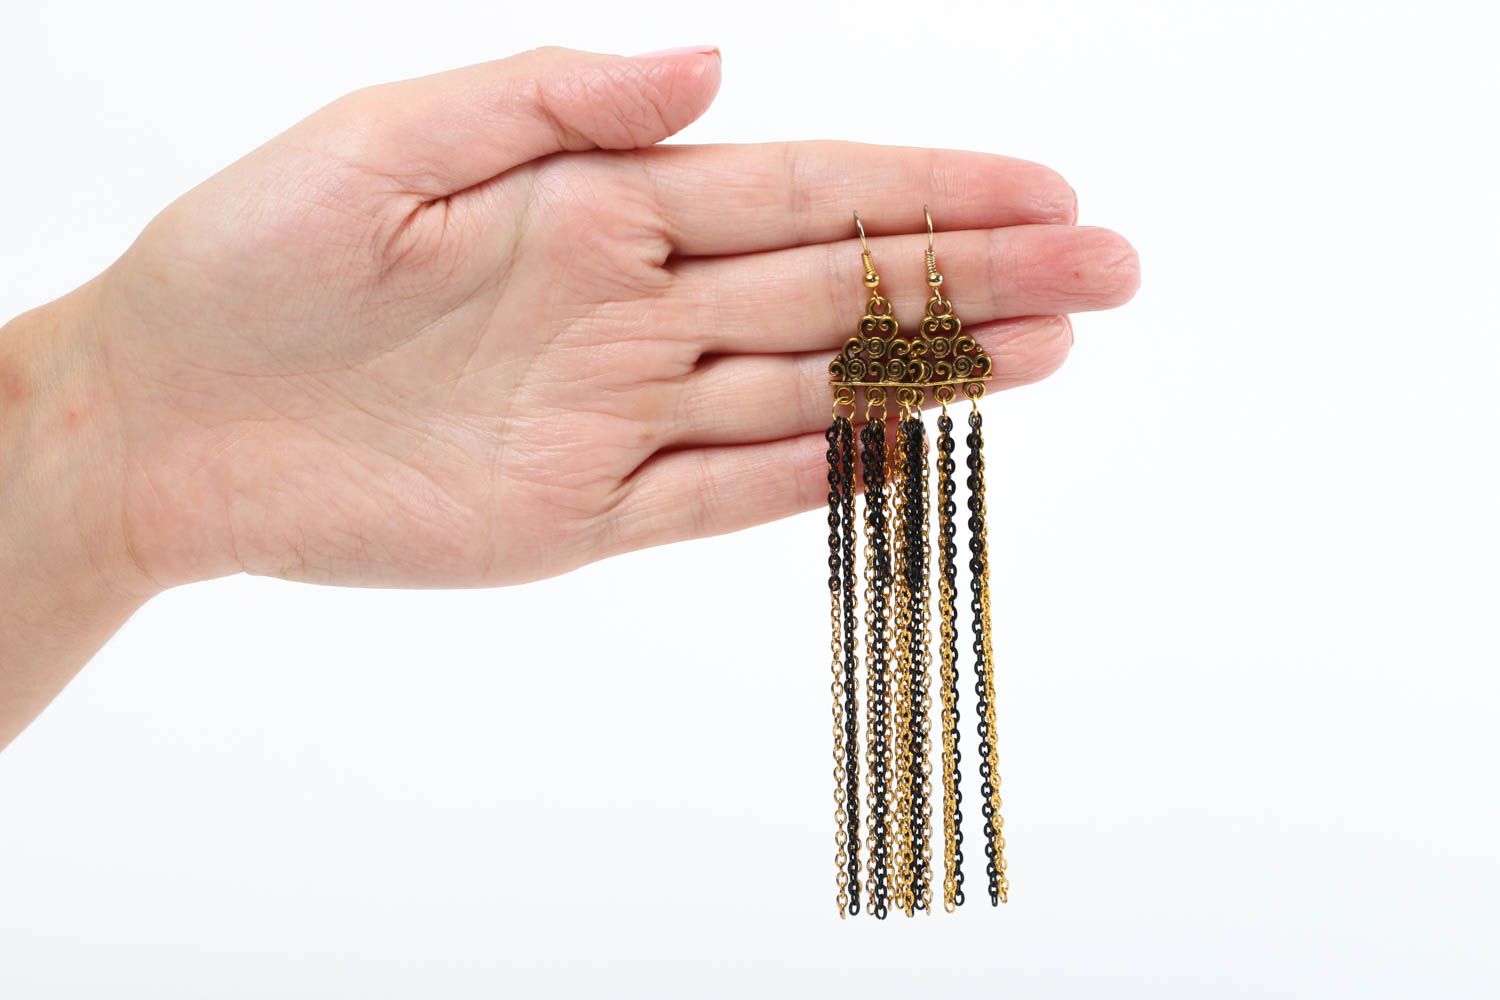 Handmade earrings designer accessory unusual jewelry beads earrings gift ideas photo 5